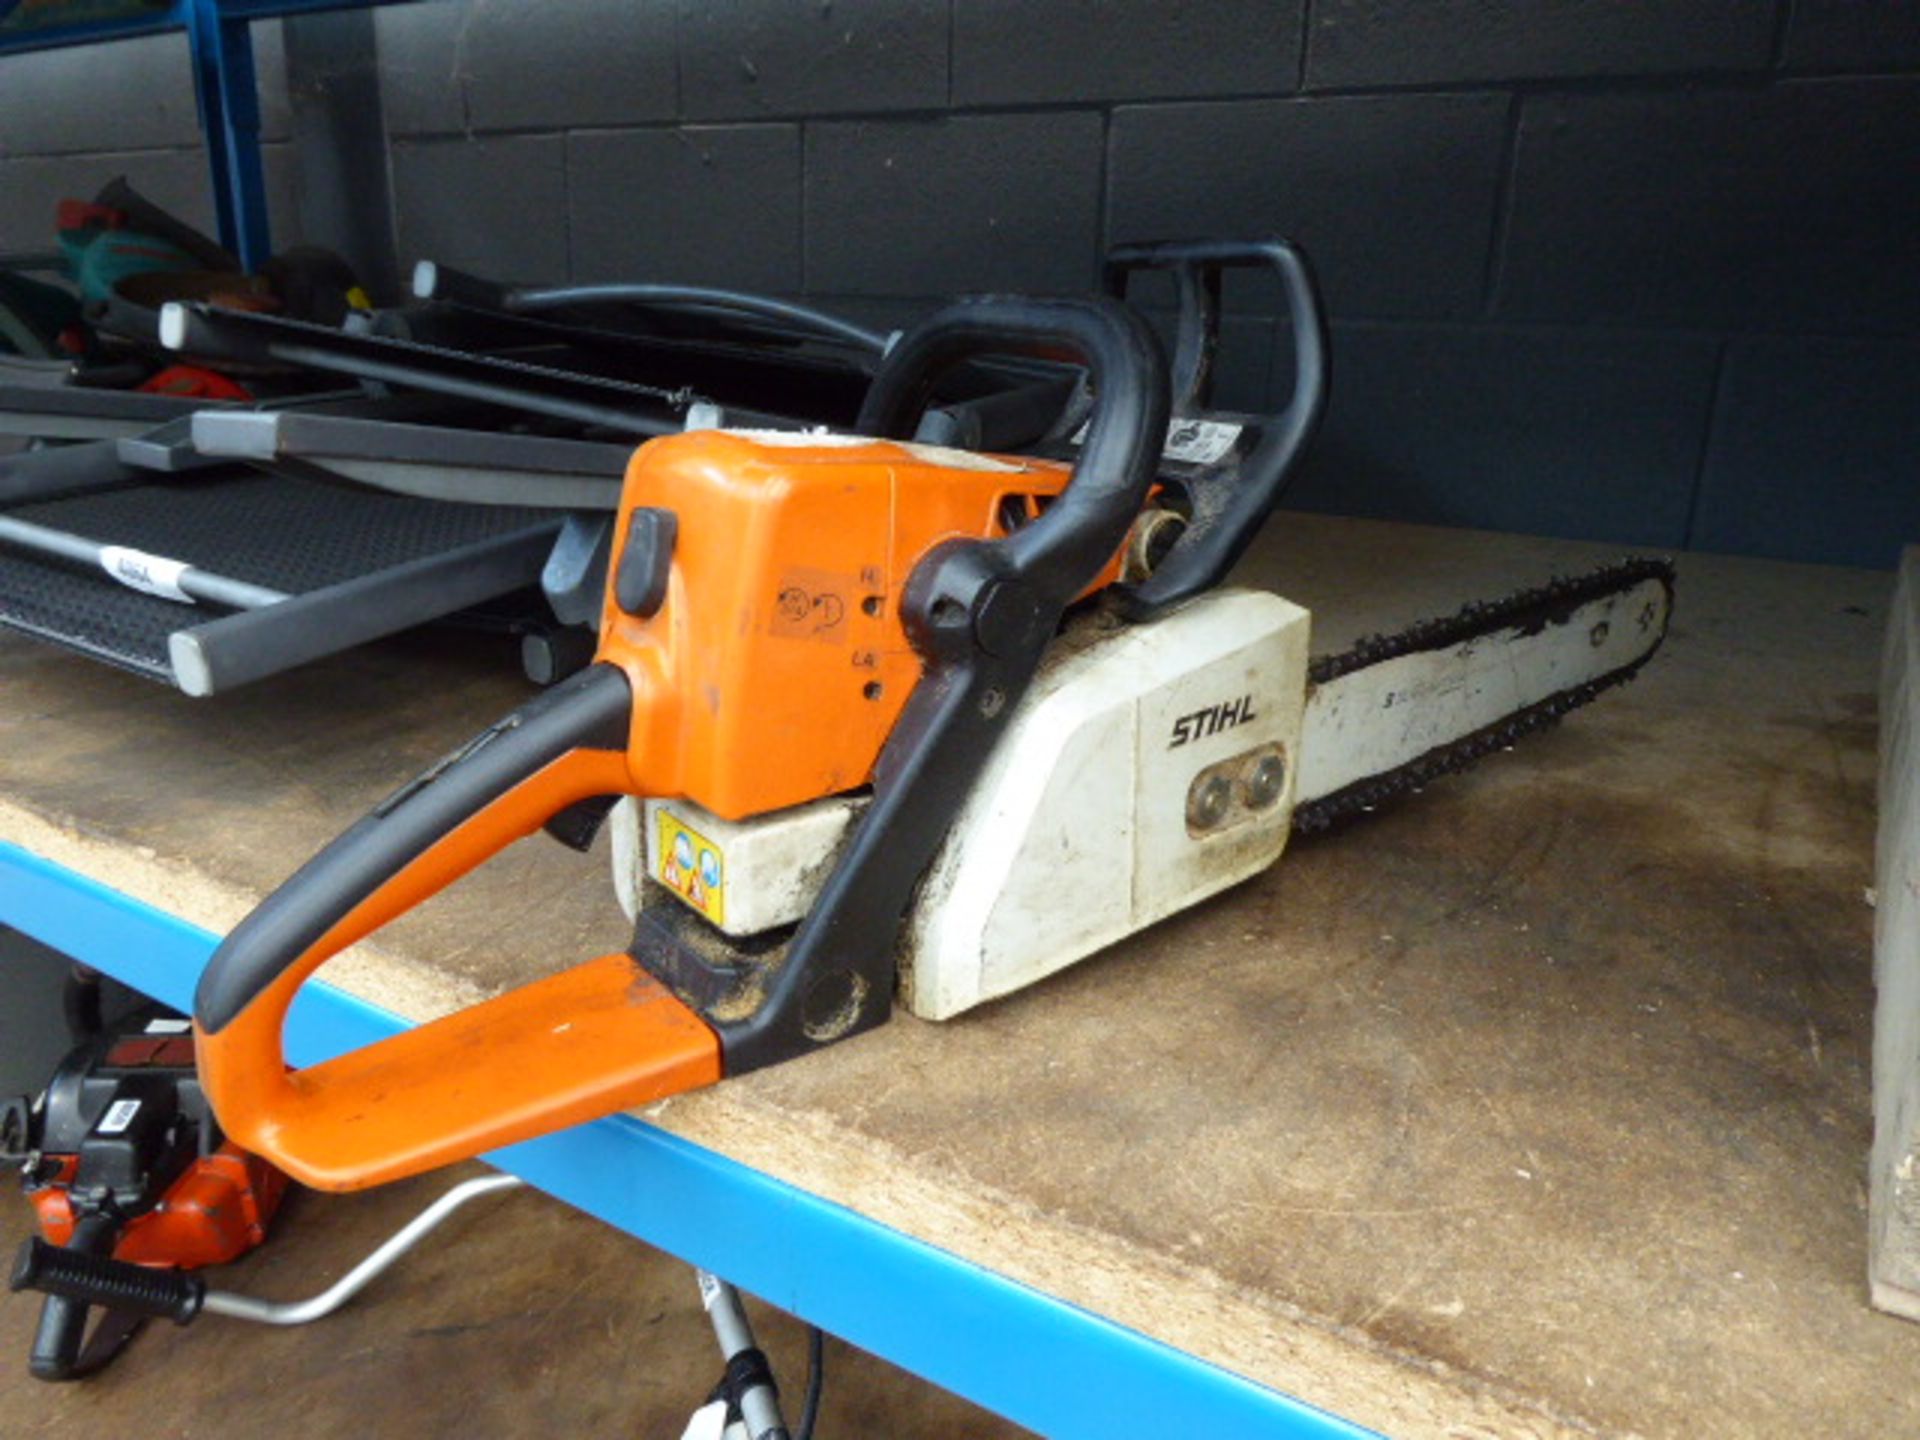 Stihl petrol powered chainsaw